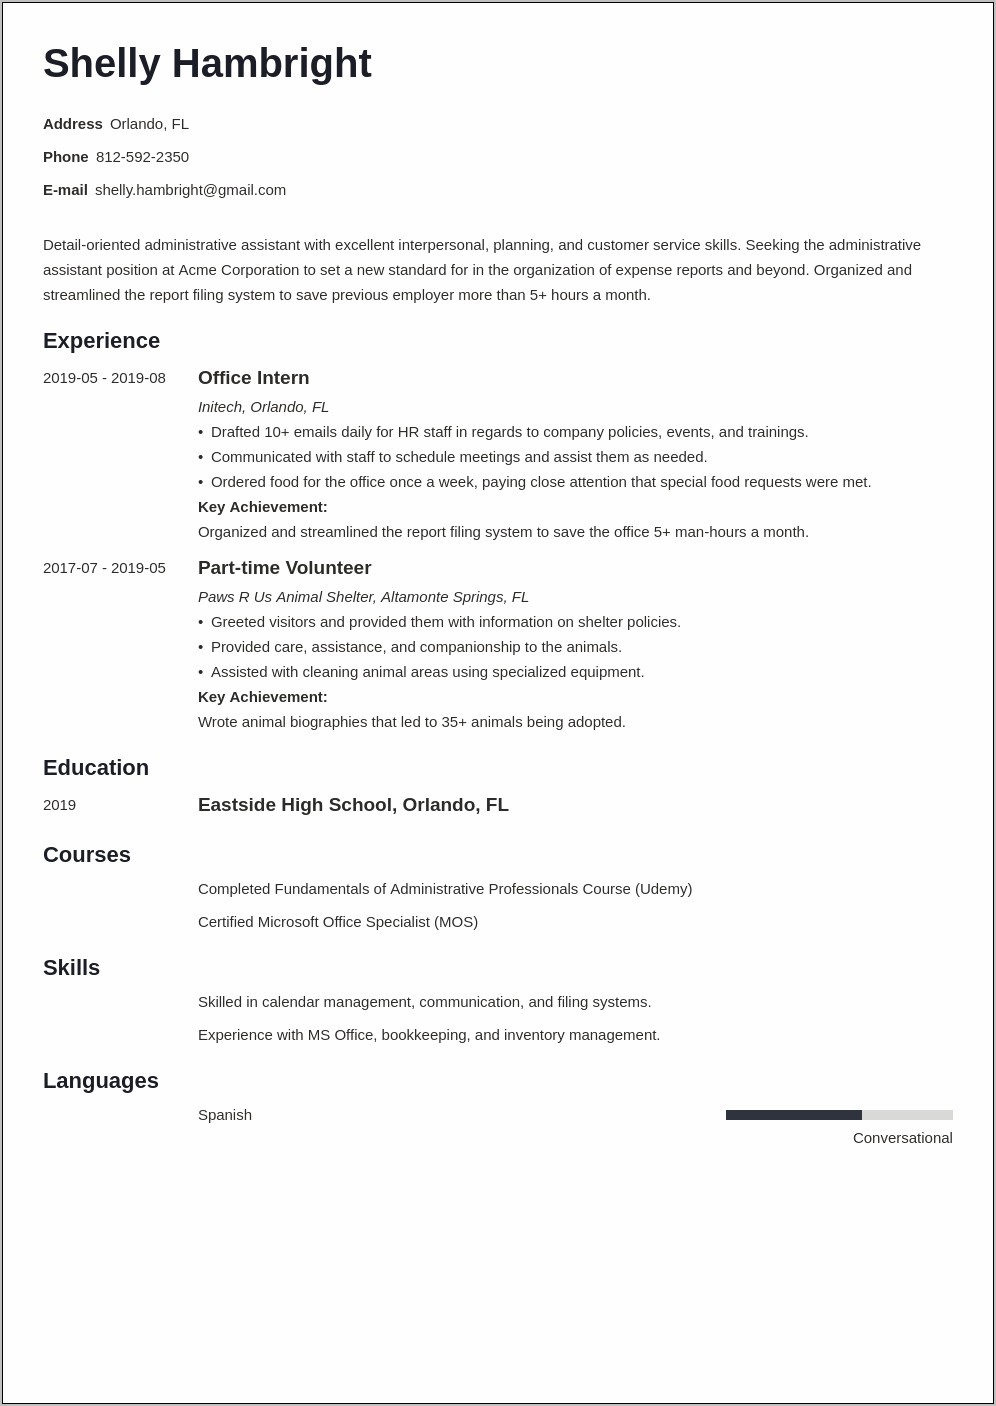 Hr Administrative Assistant Job Description Resume